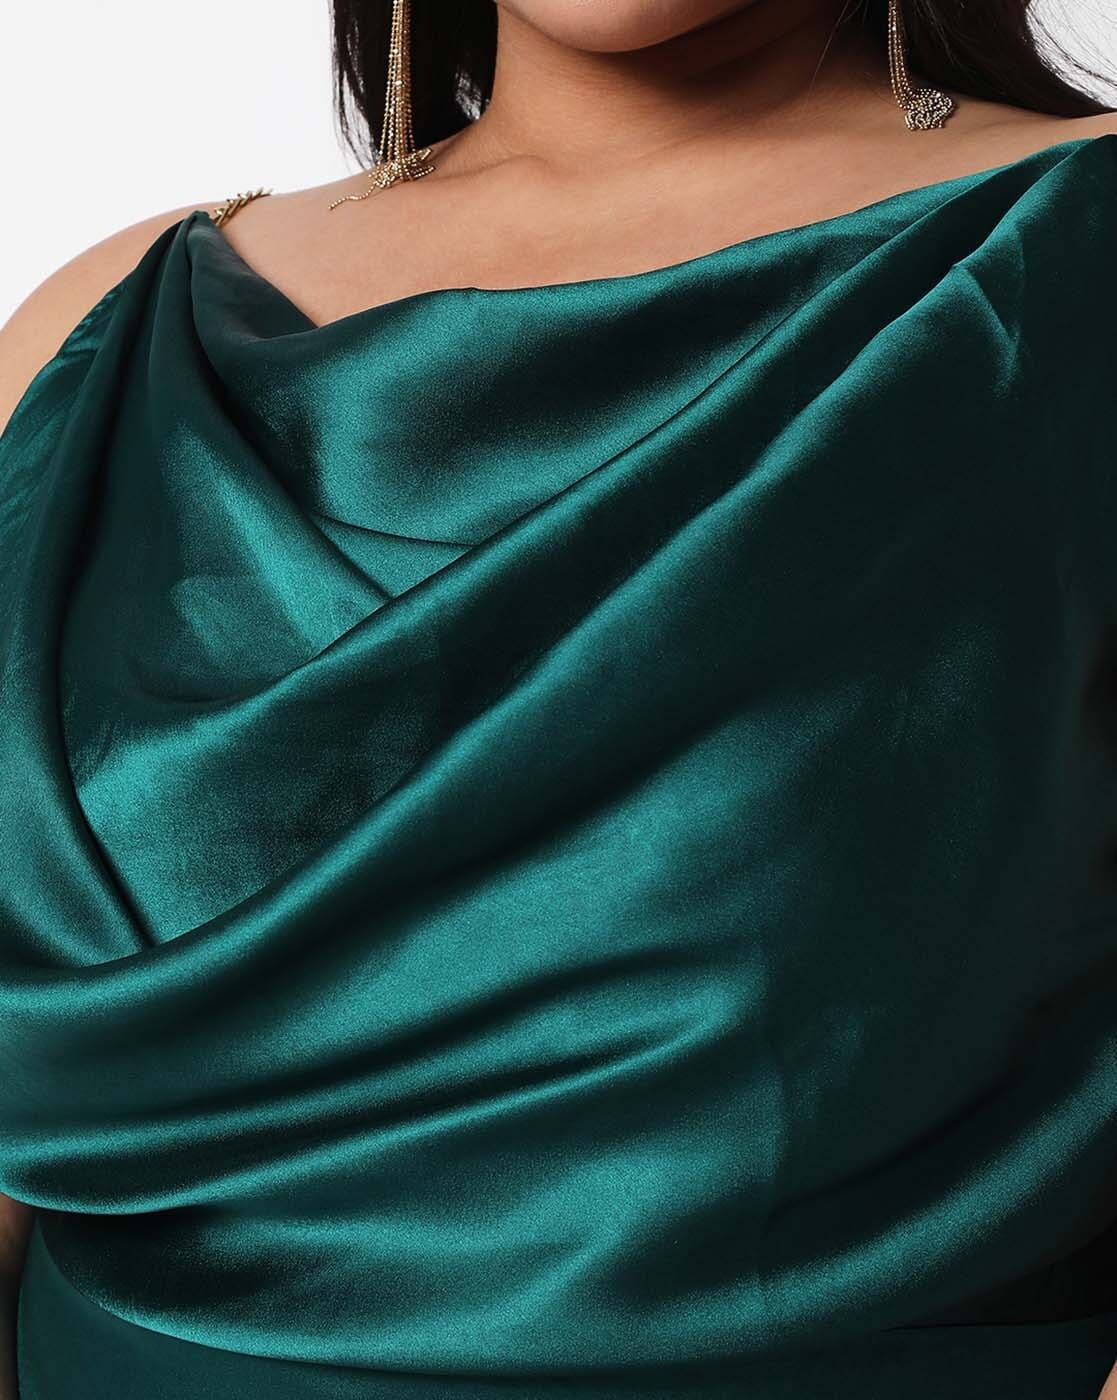 Buy Lastinch Women's Plus Size Cotton Pista Green Cowl Dress (Medium) at